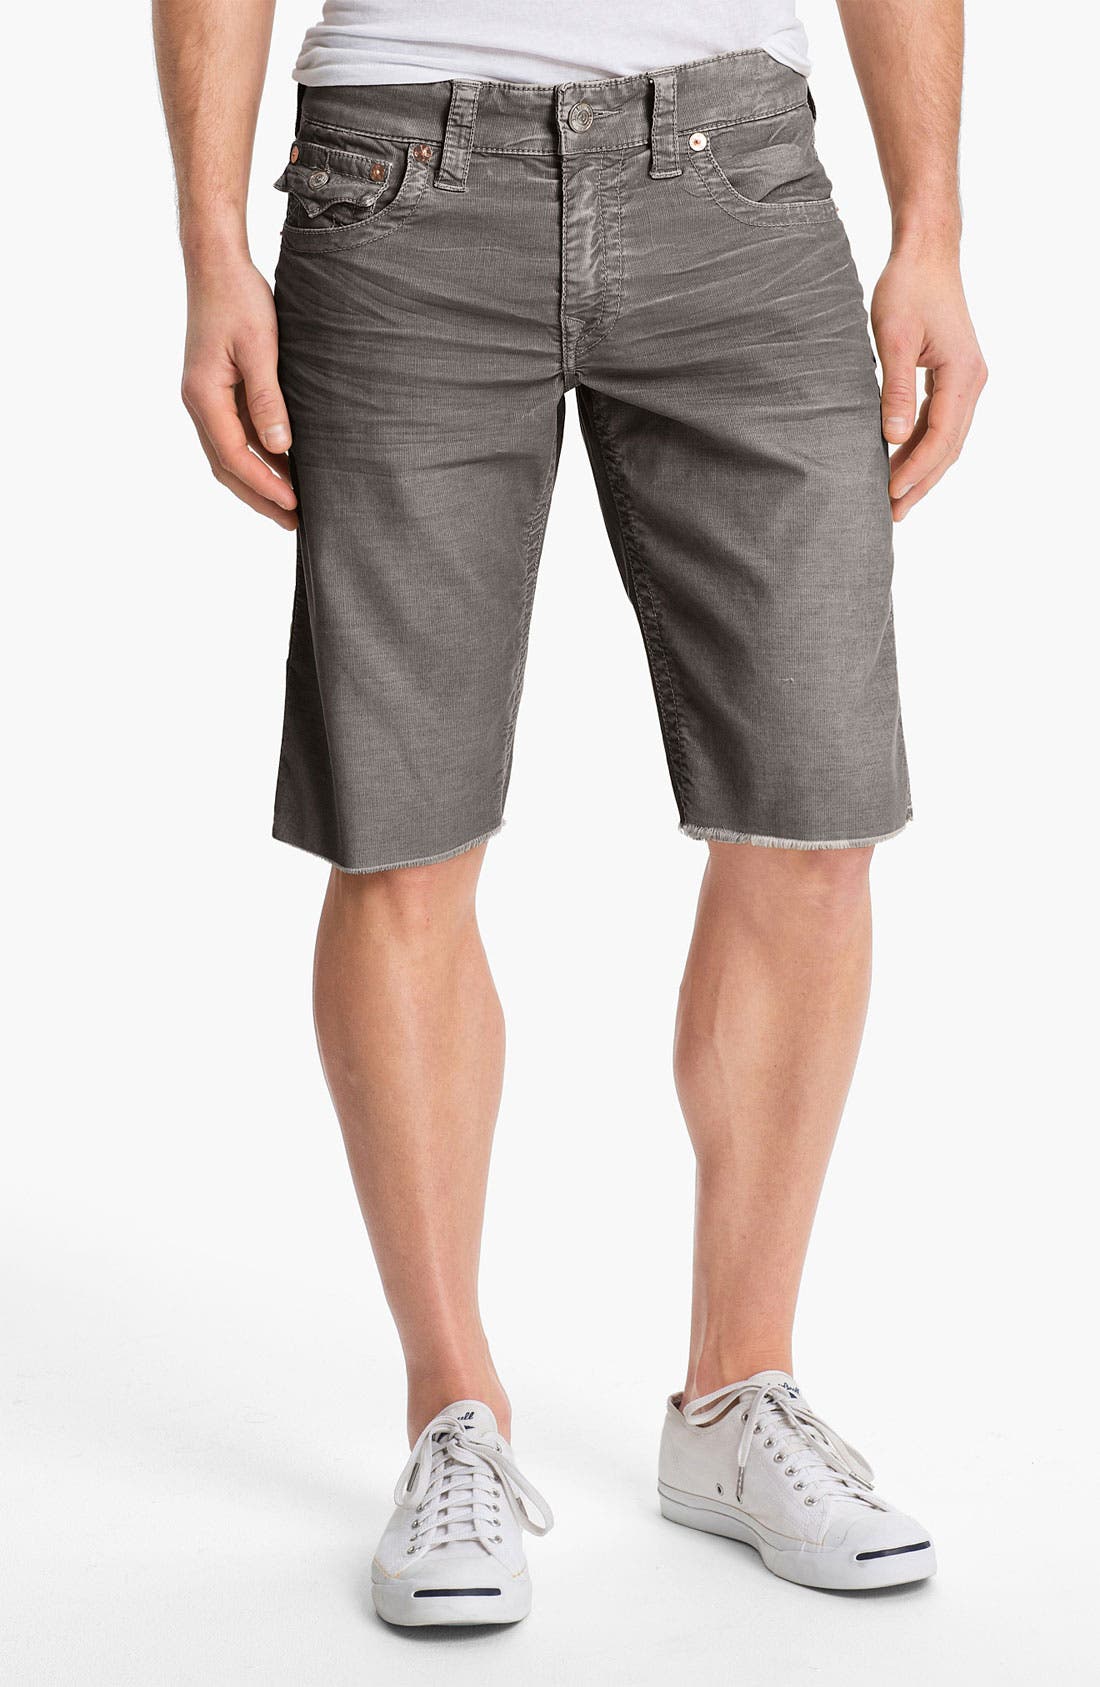 grey true religion shorts